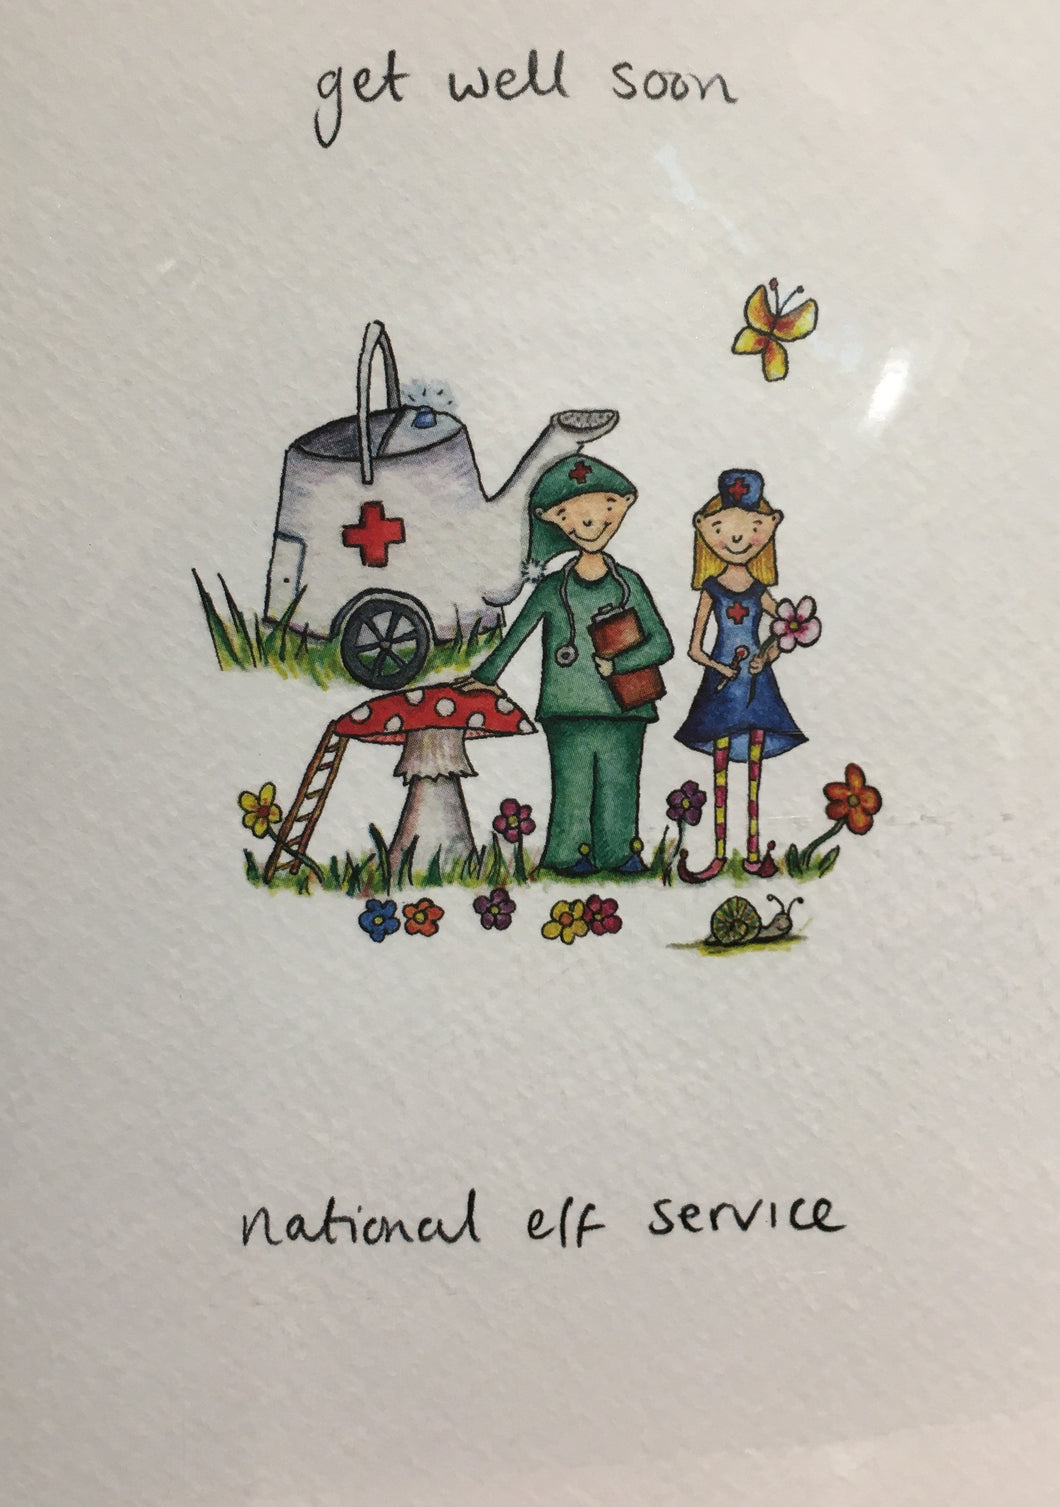 National elf service greetings card